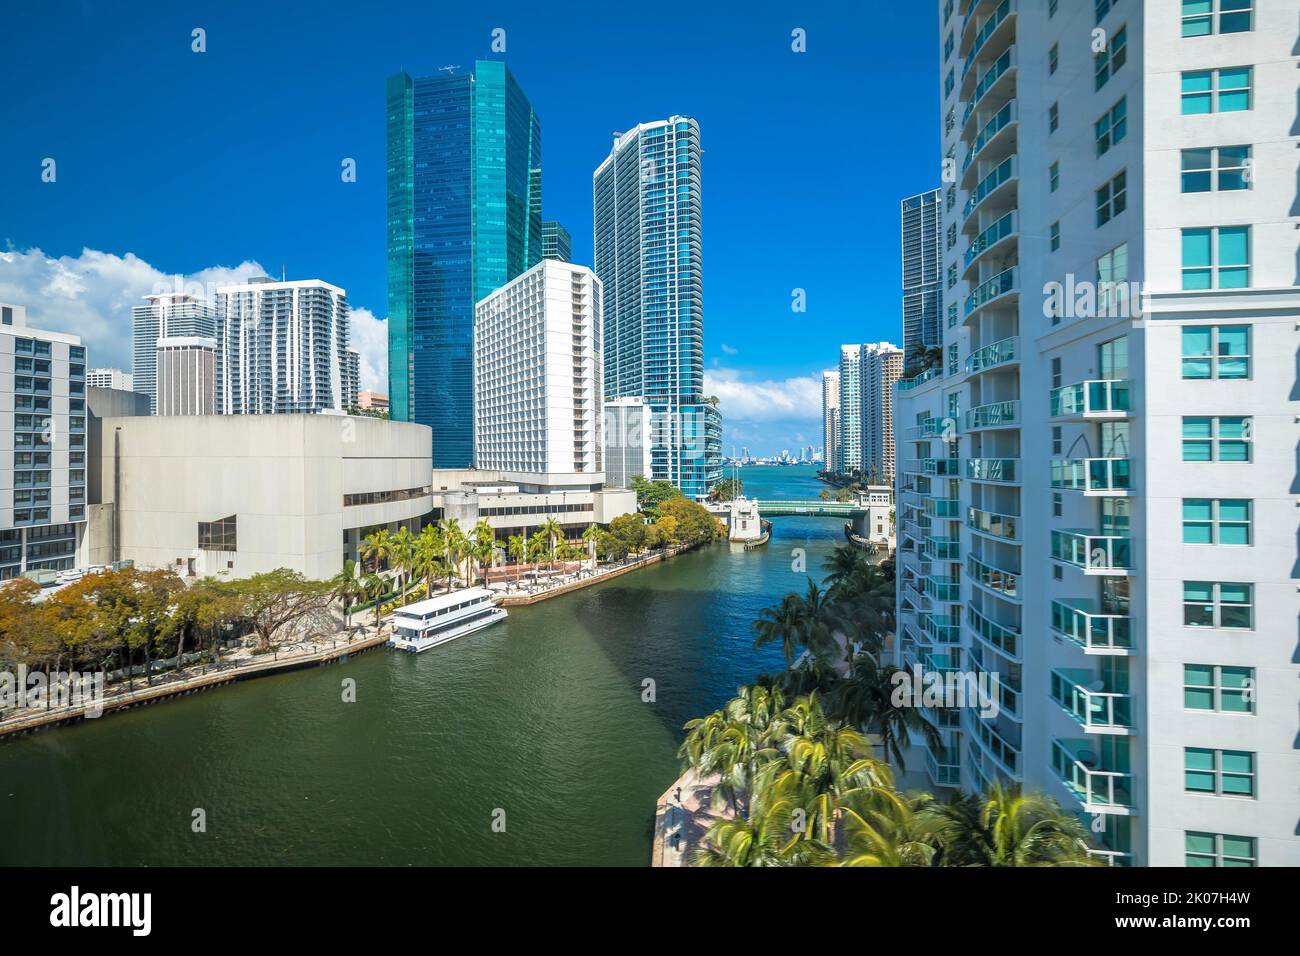 Miami river waterfront scenic view, Florida state of USA Stock Photo